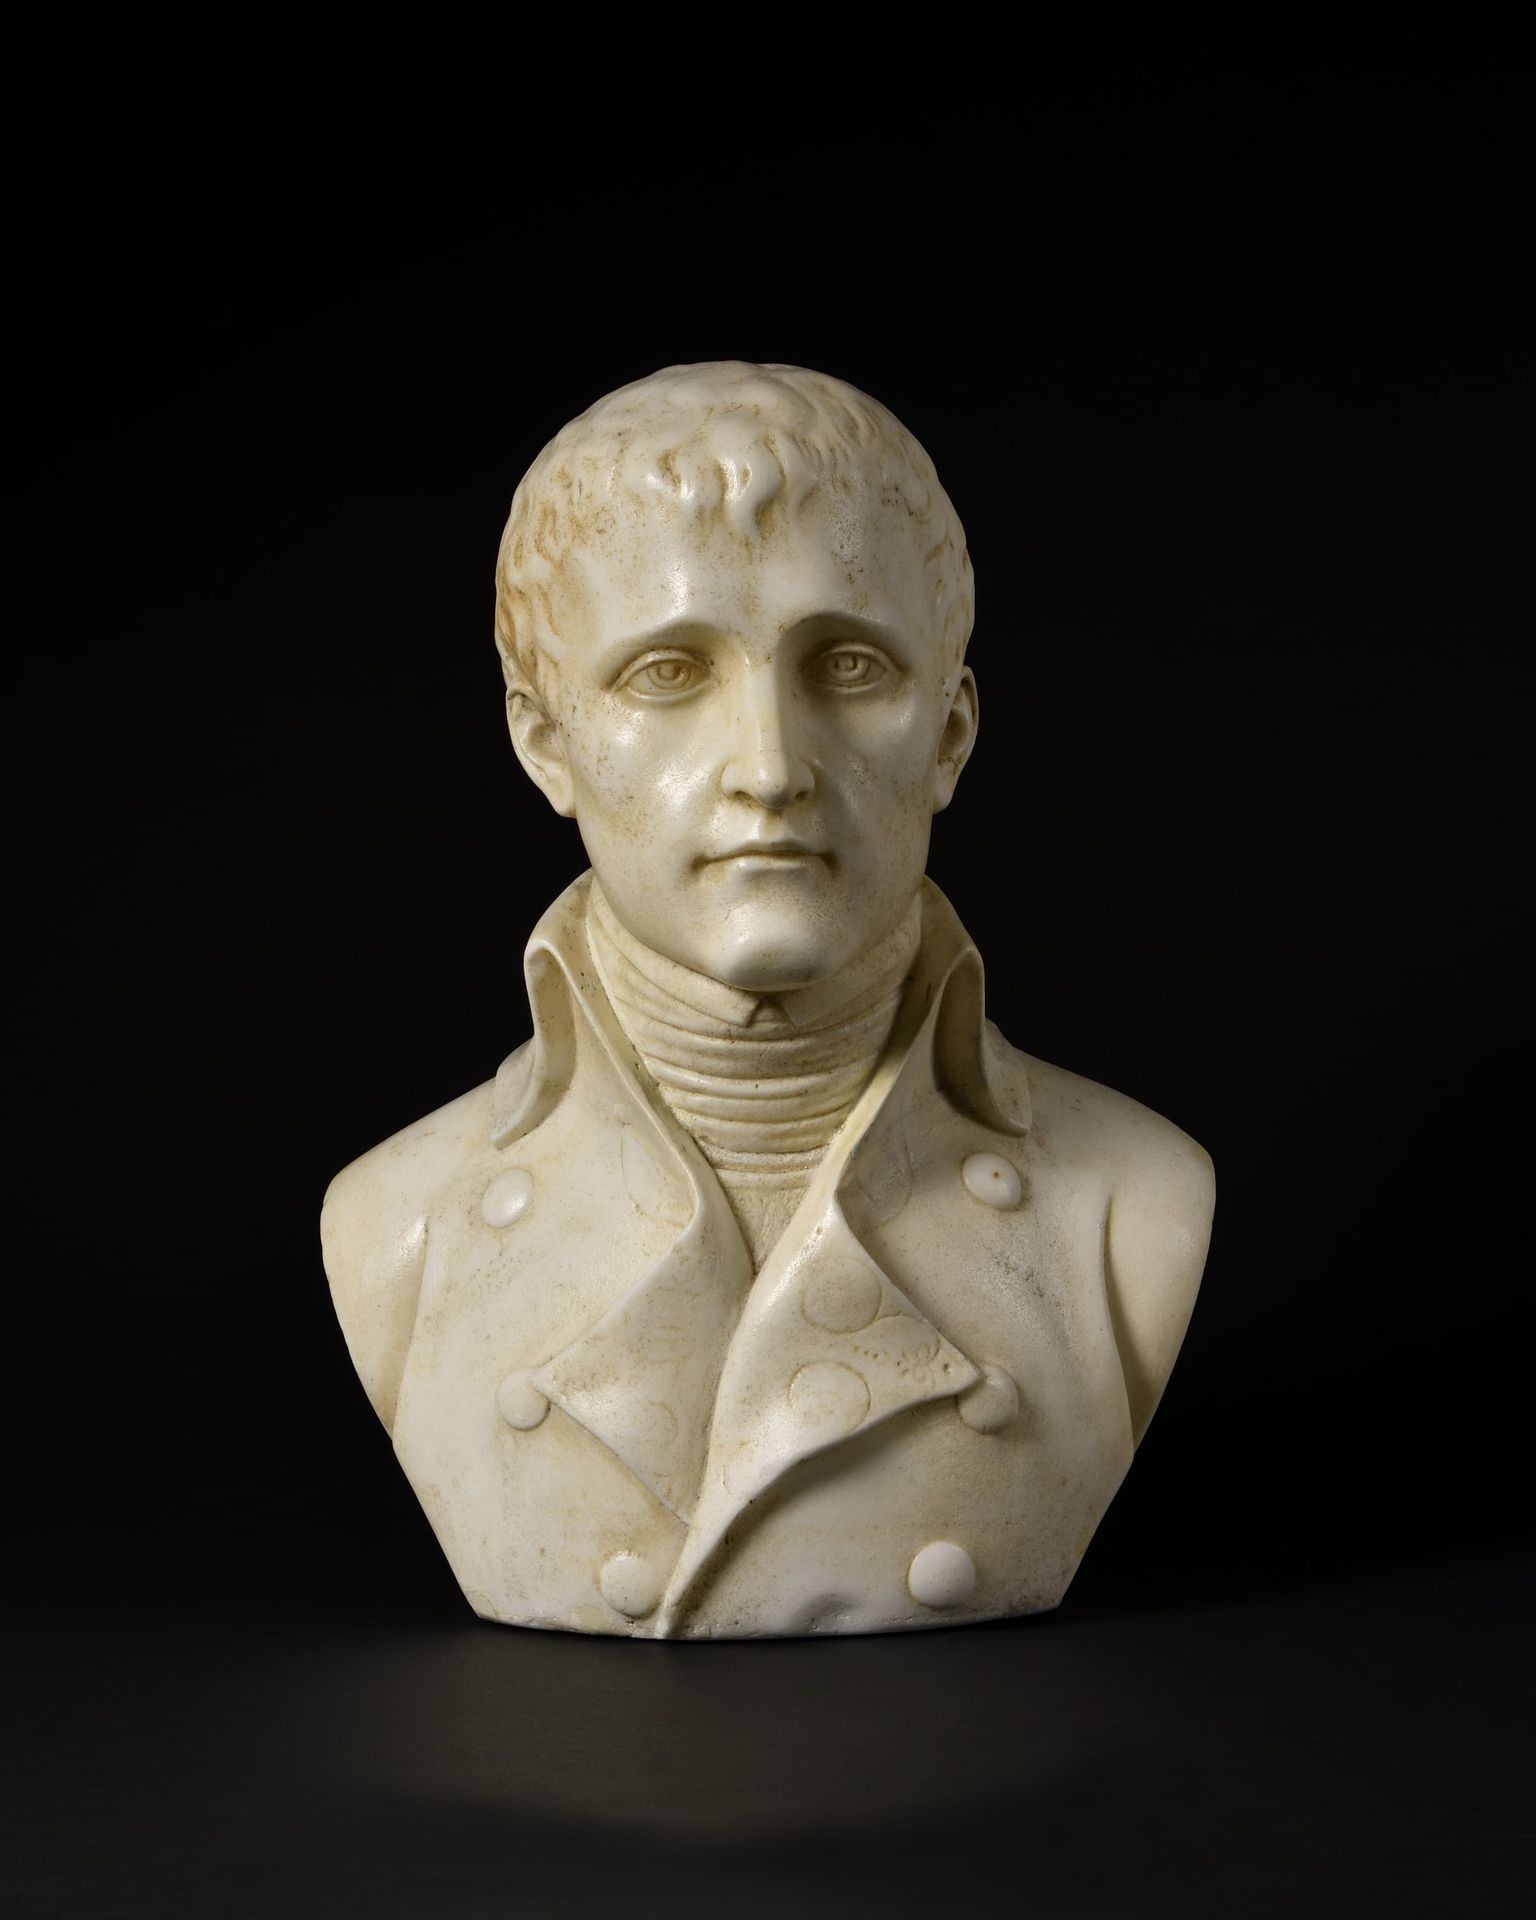 Null BOIZOT, D'APRES. 
" Bonaparte, Erster Konsul der Republik ". 
Marmorbüste m&hellip;